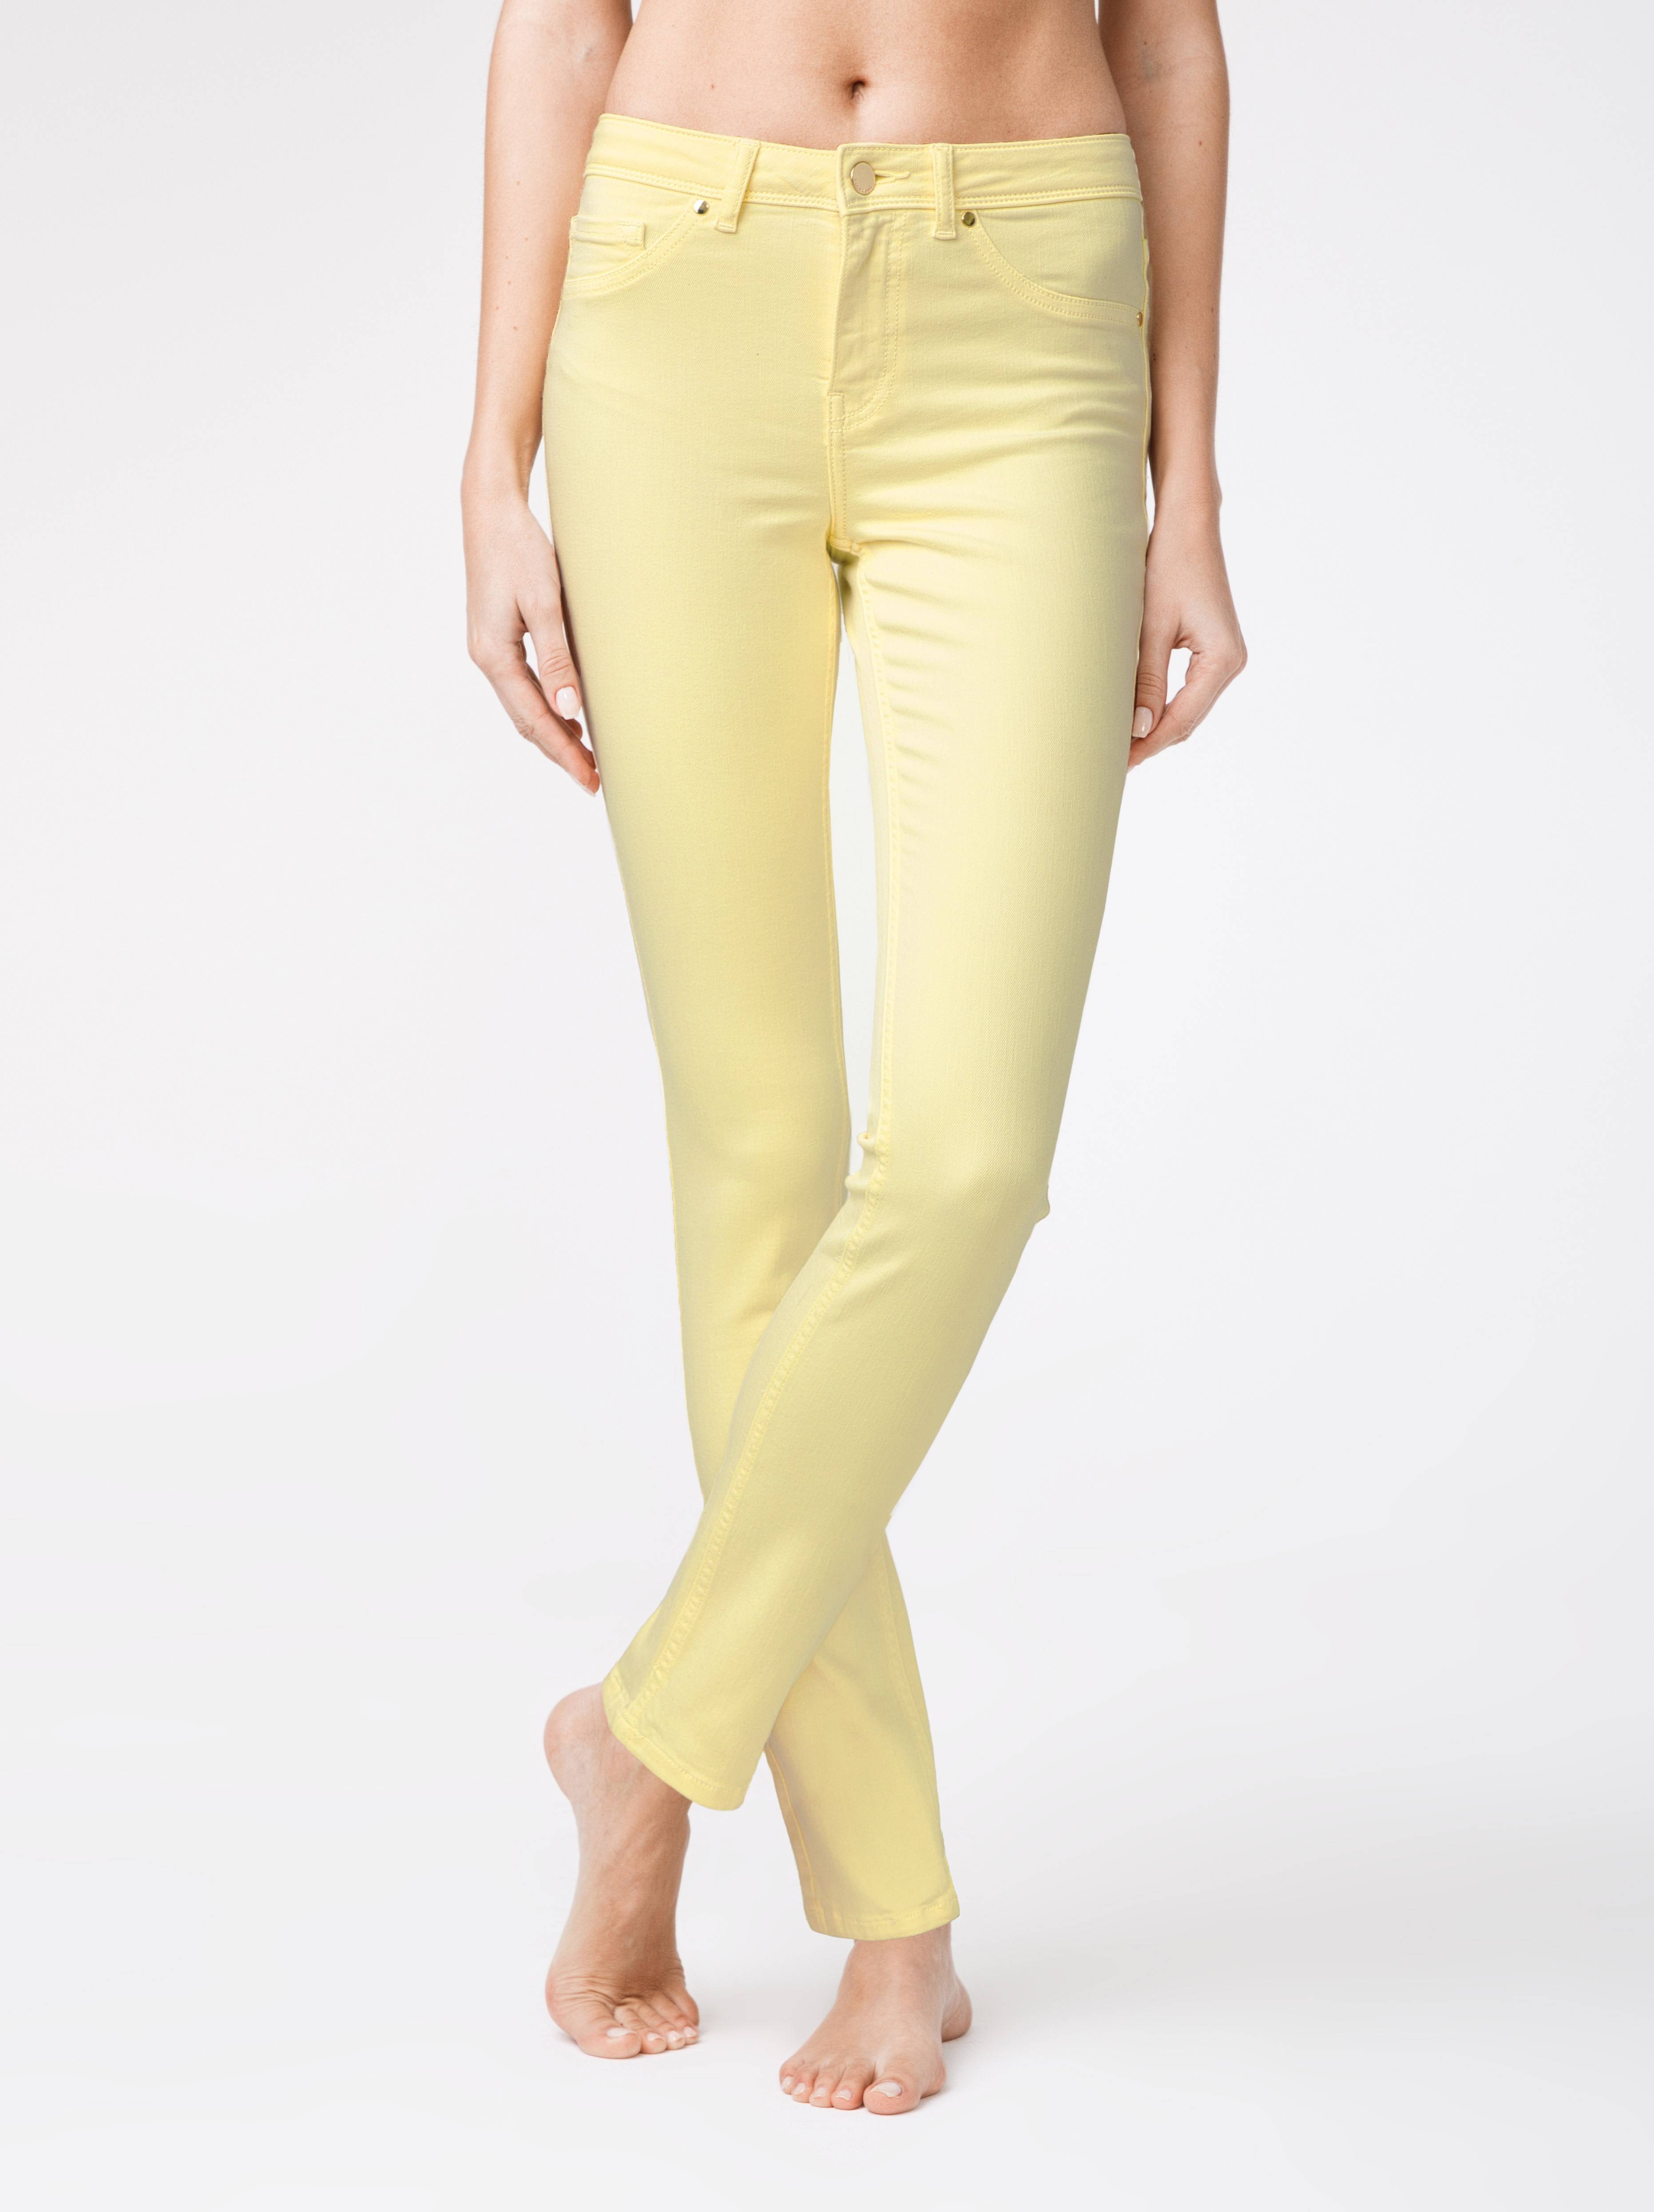 Моделирующие Soft Touch джинсы CON-38Y Conte ⭐️, цвет pastel yellow, размер 164-102